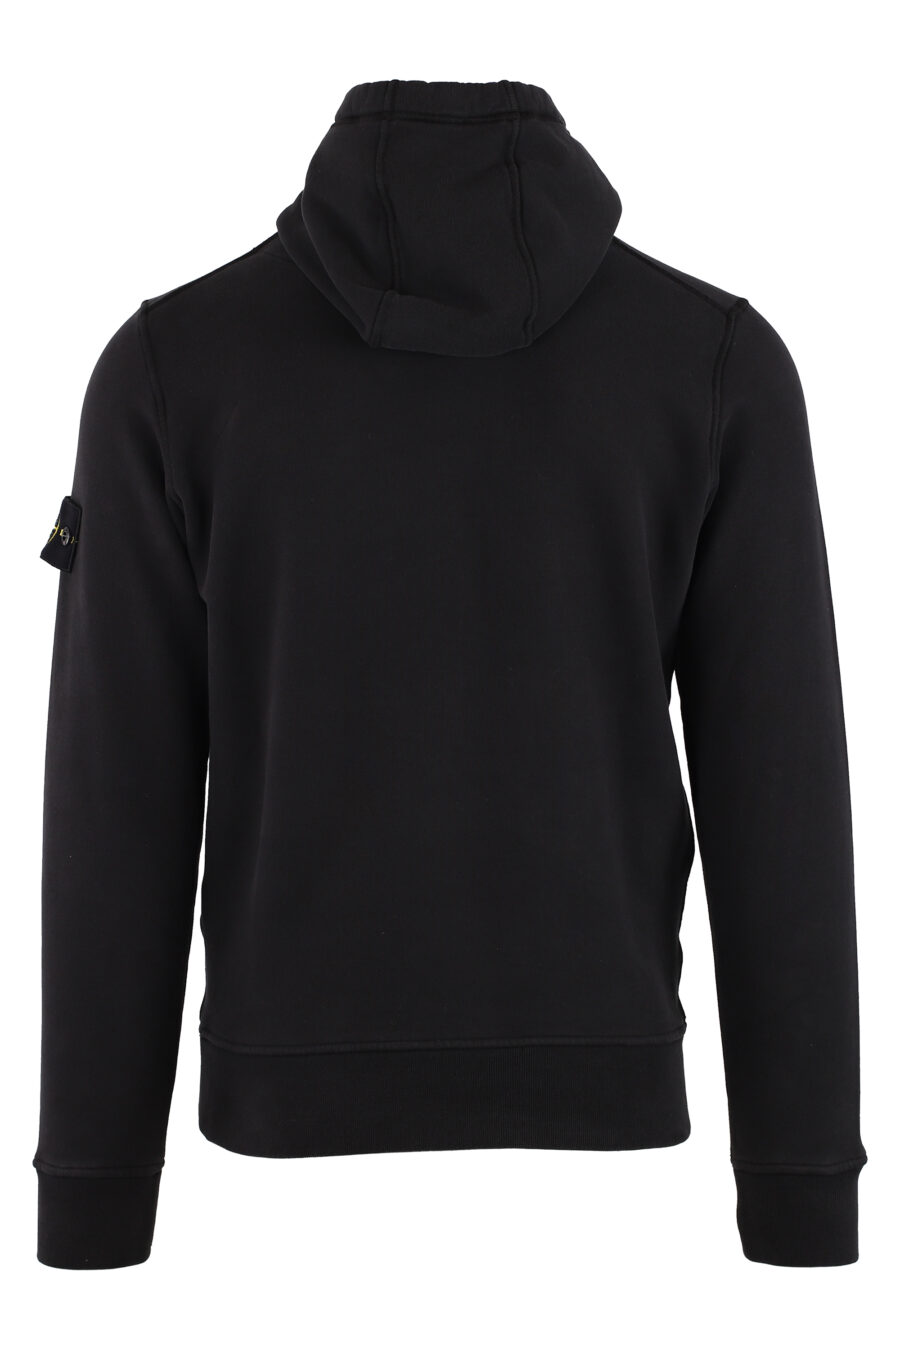 Black hooded sweatshirt with logo patch - IMG 1443